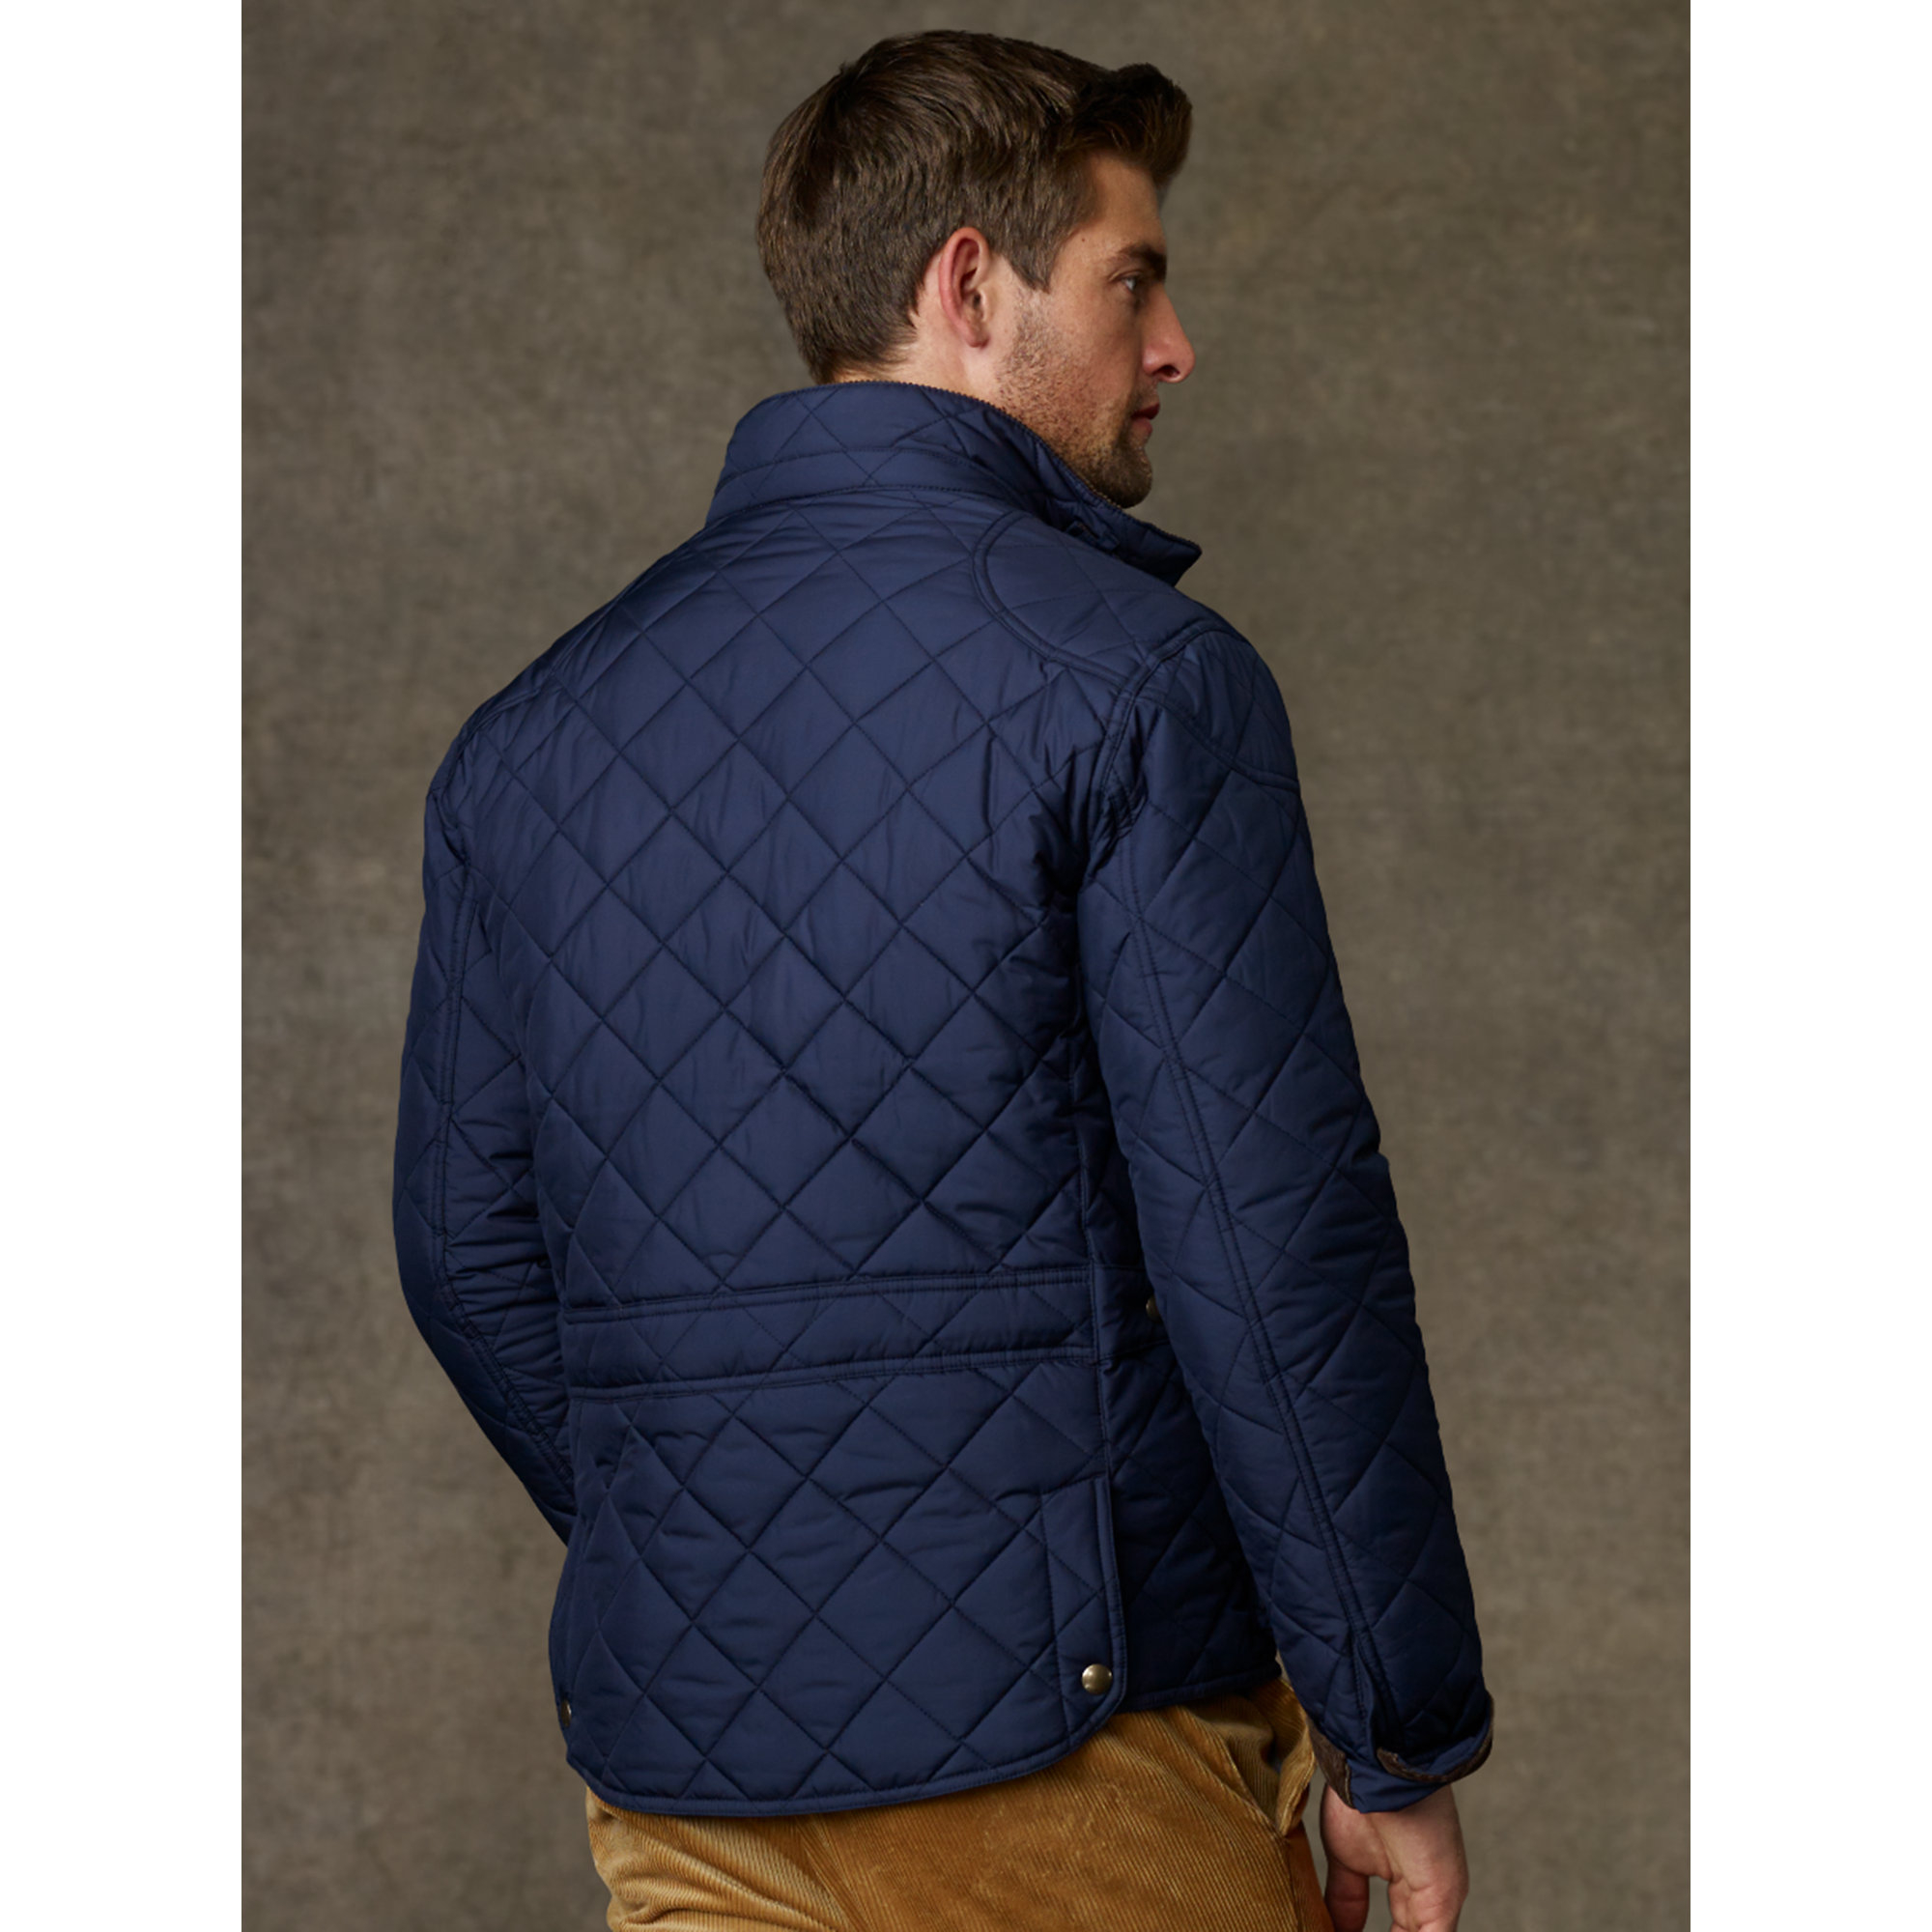 Ralph Lauren Blue Quilted Jacket new Zealand, SAVE 47% - eagleflair.com